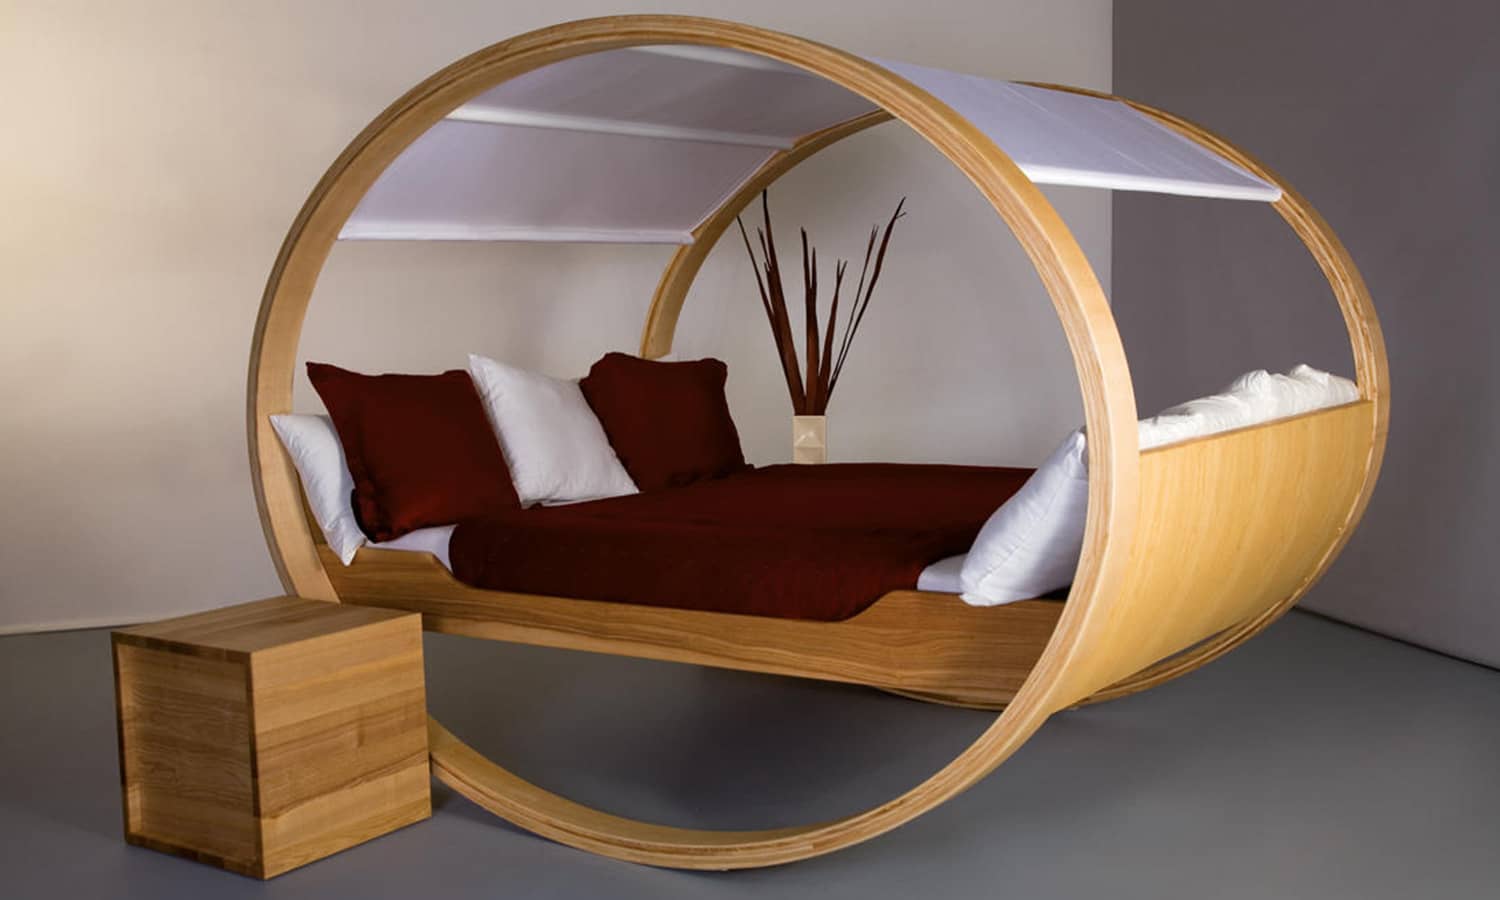 Modern Bedrooms gallery